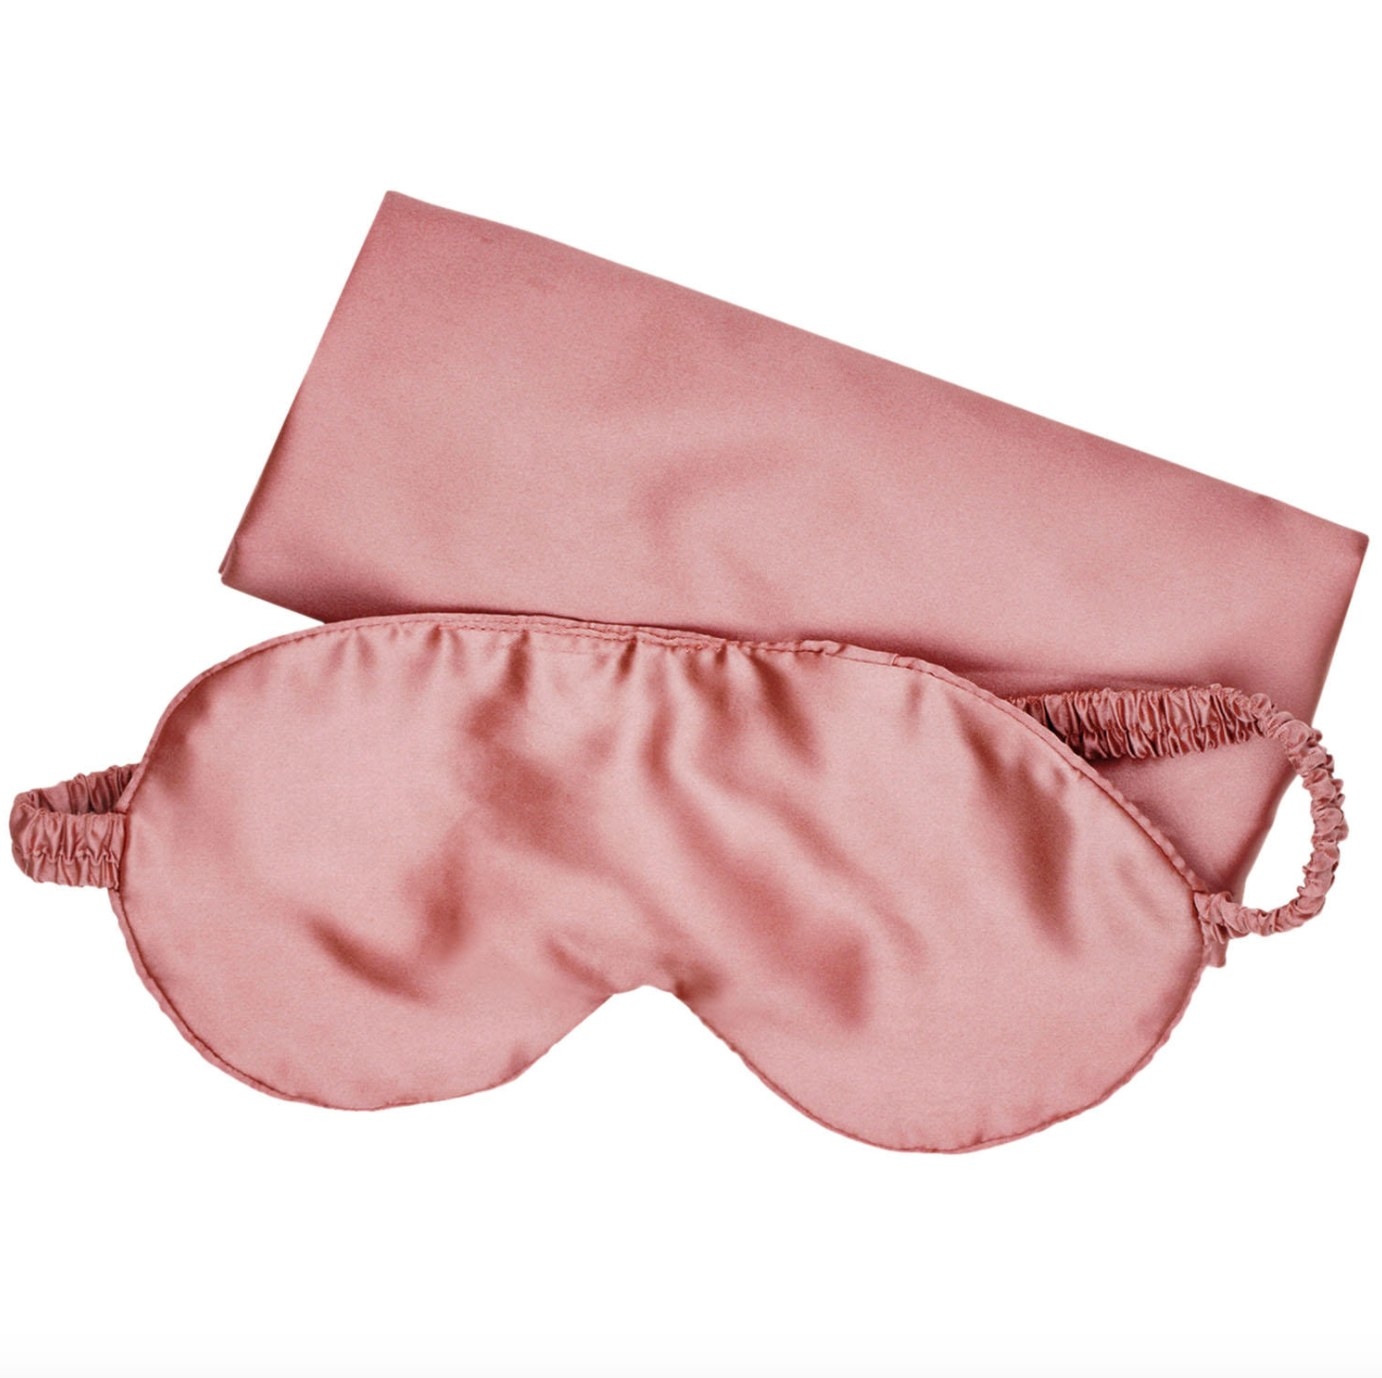 The satin pillowcase and eyemask set in blush